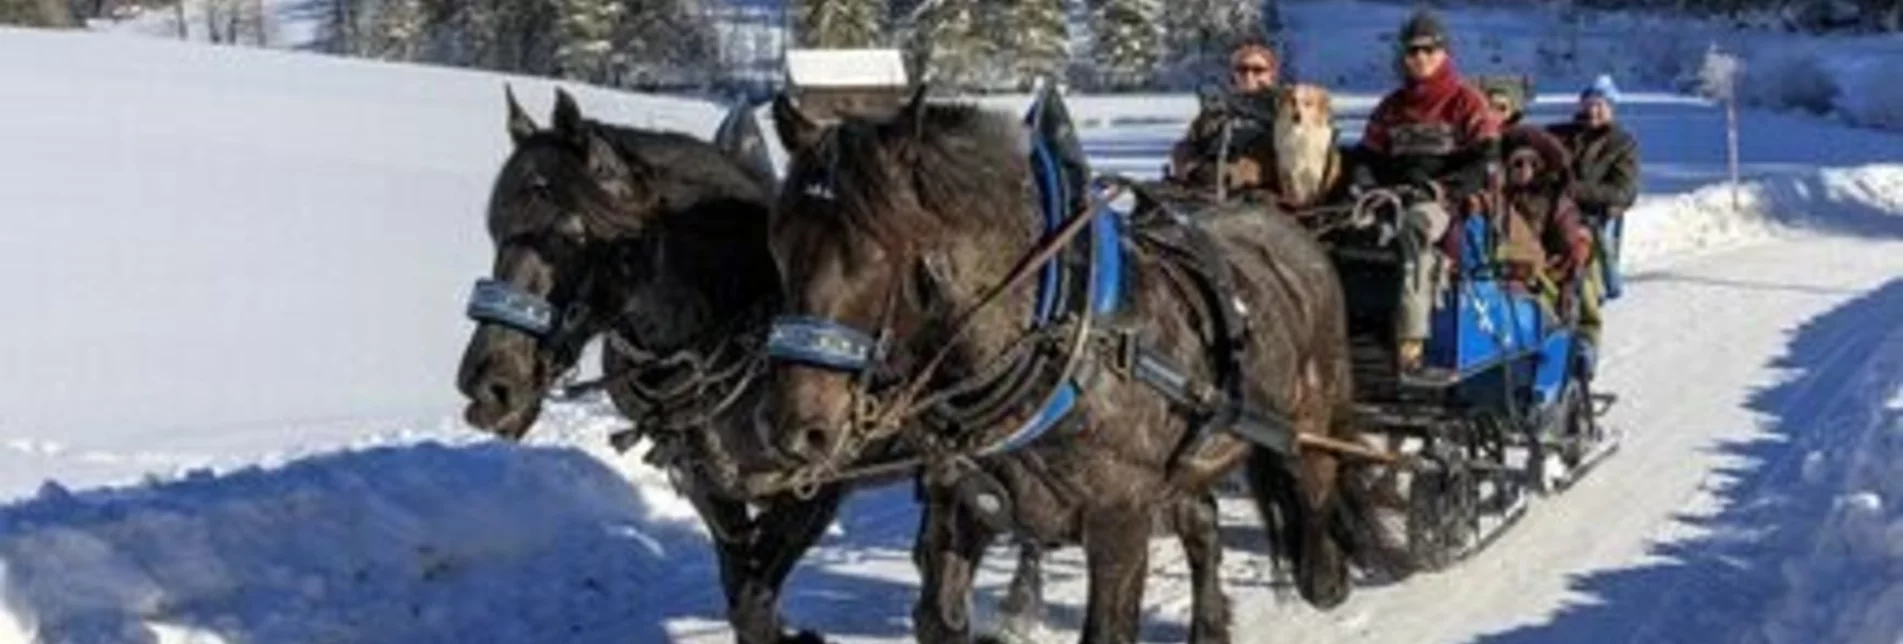 Horse Carriage Ride Angererhof  - Touren-Impression #1